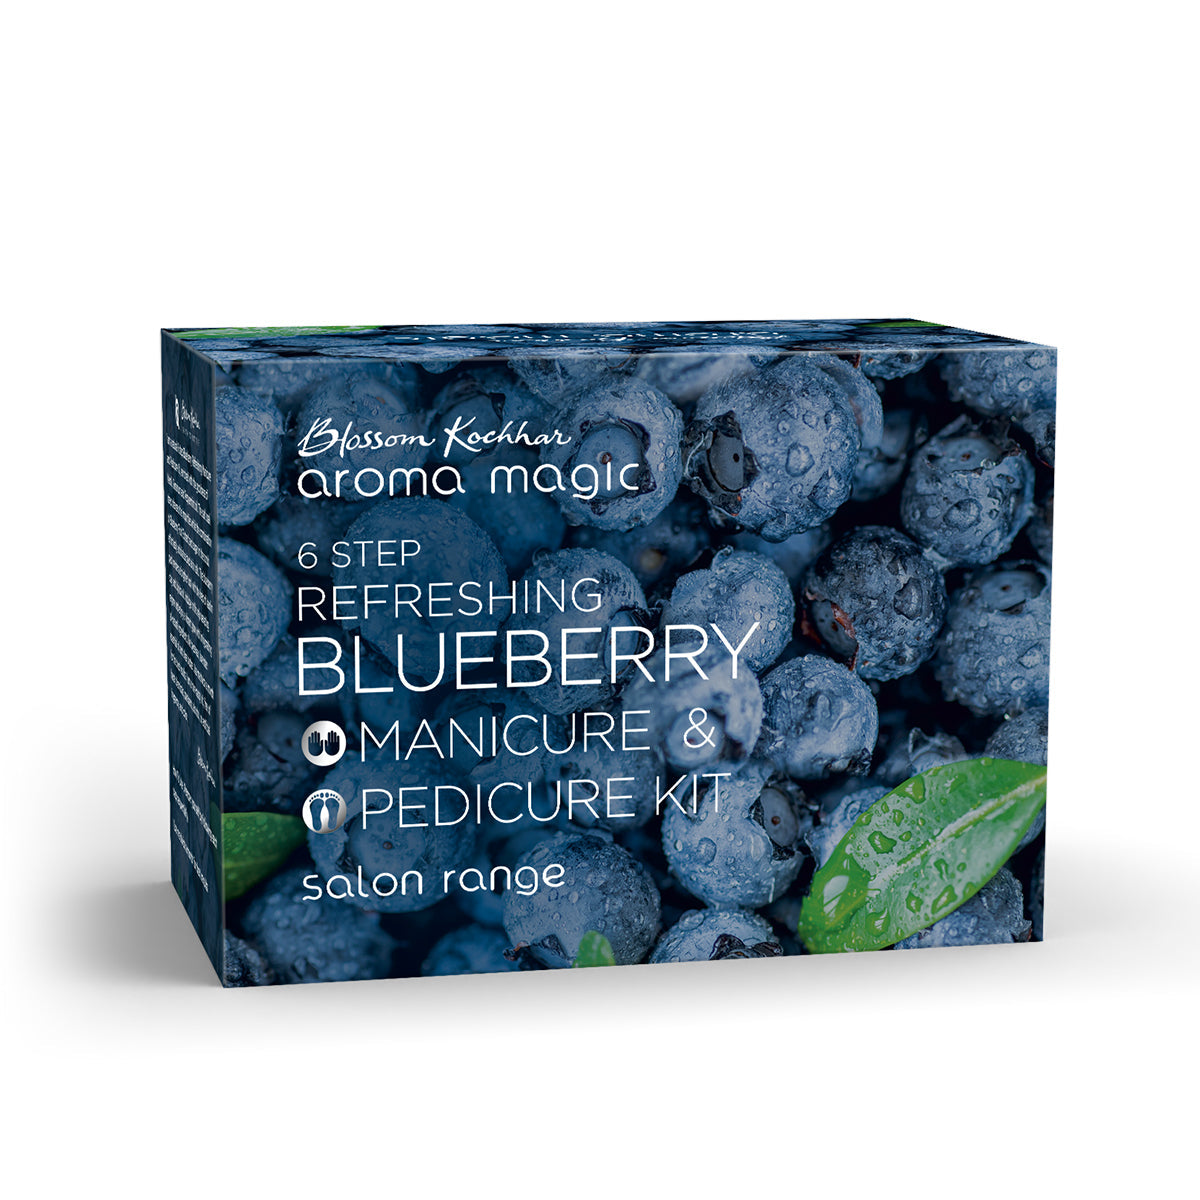 Blueberry Manicure & Pedicure Kit